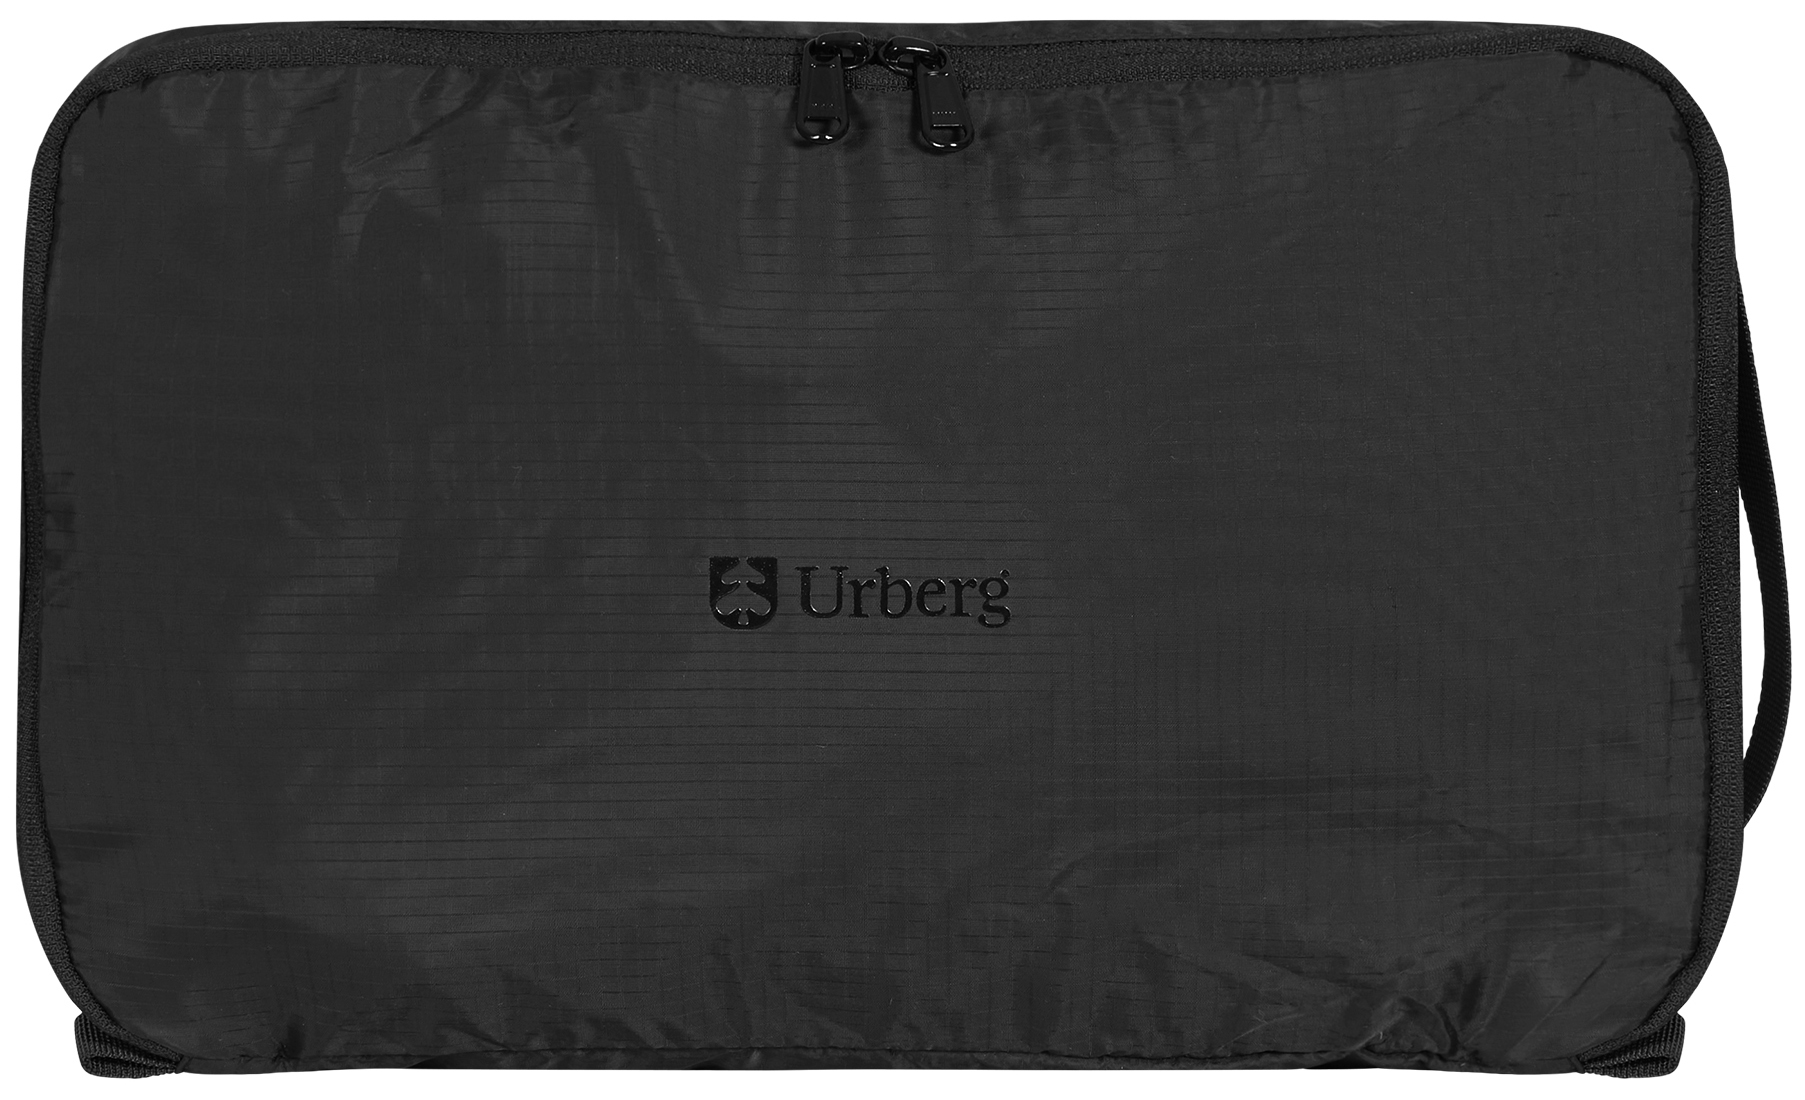 Urberg Packing Cube Large Black